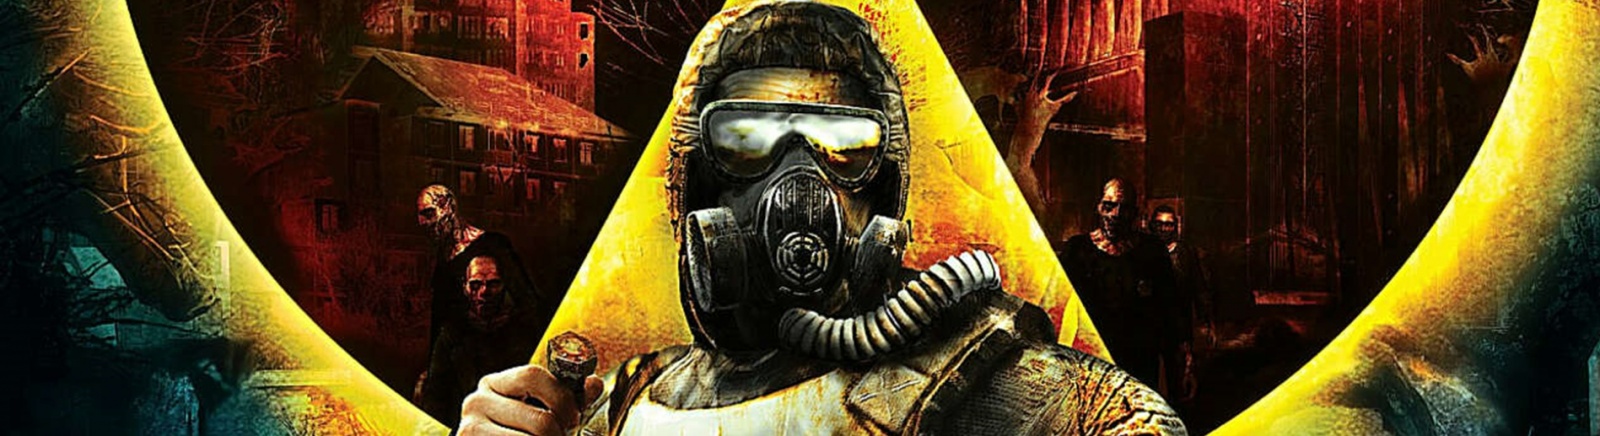 S.T.A.L.K.E.R.: Shadow of Chernobyl Spawnermod 6.0 скриншот